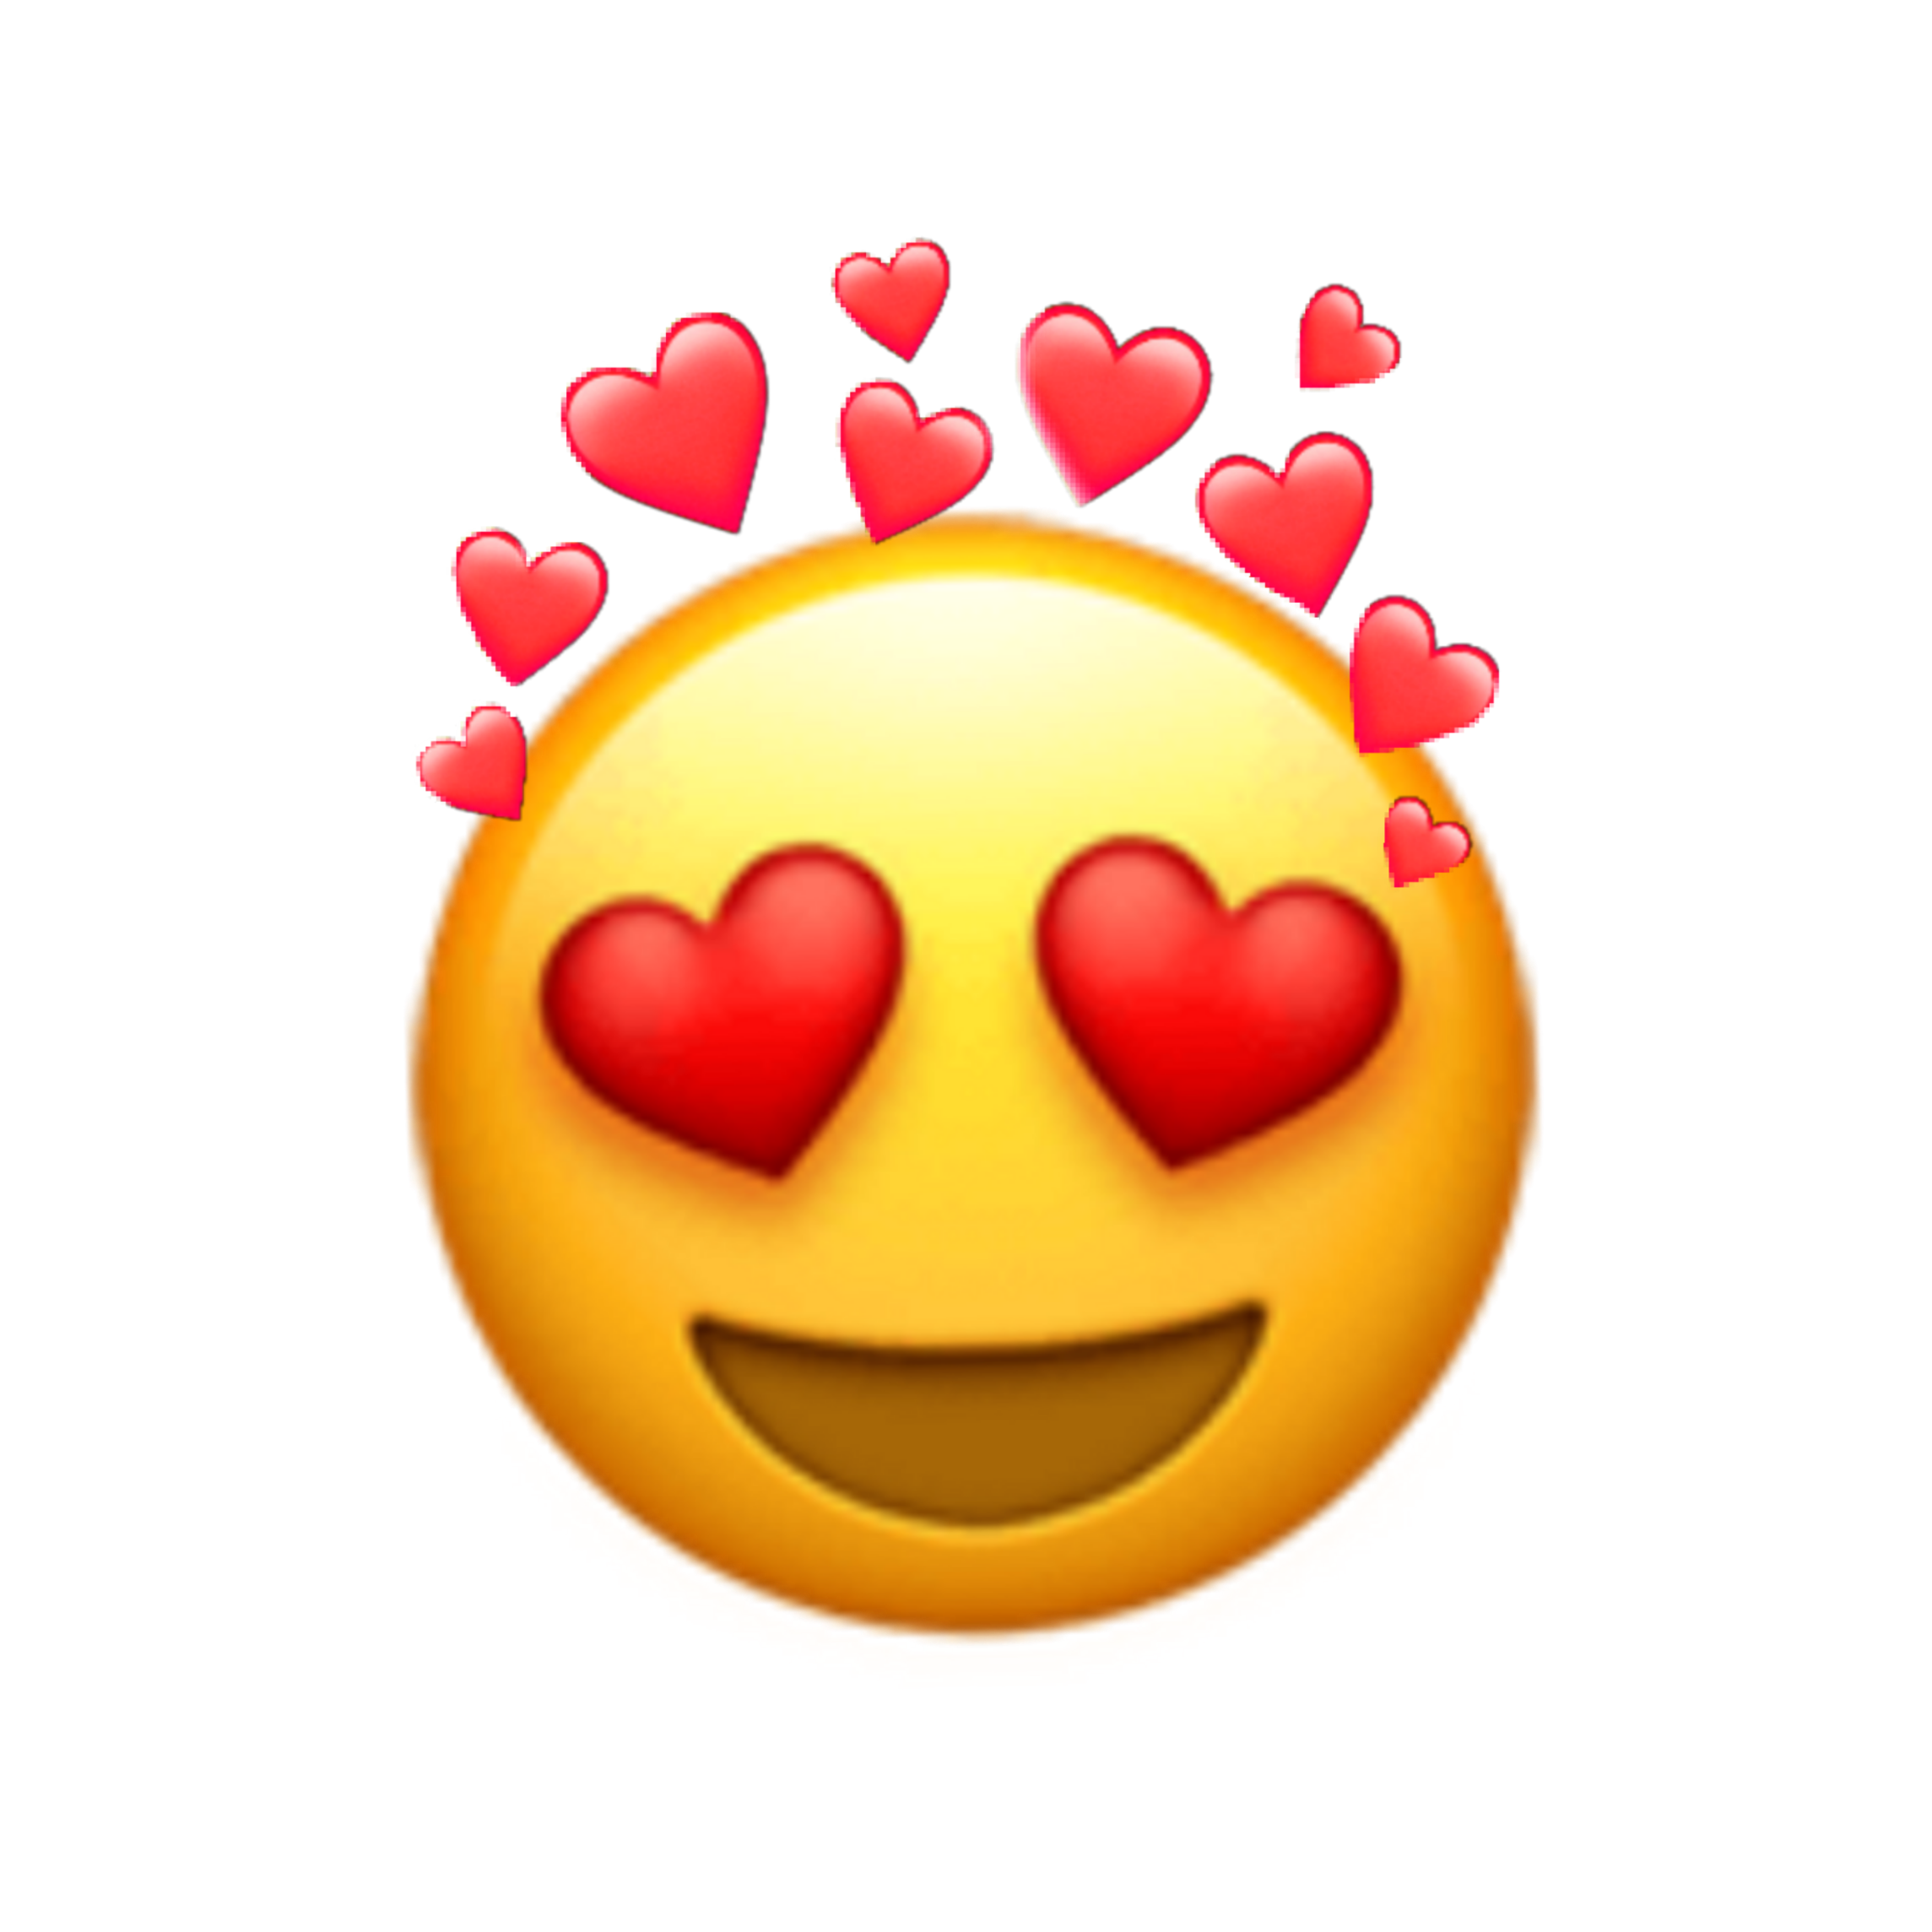 Red Heart Emoji Heart Sticker Emoji Transparent Backg Vrogue Co